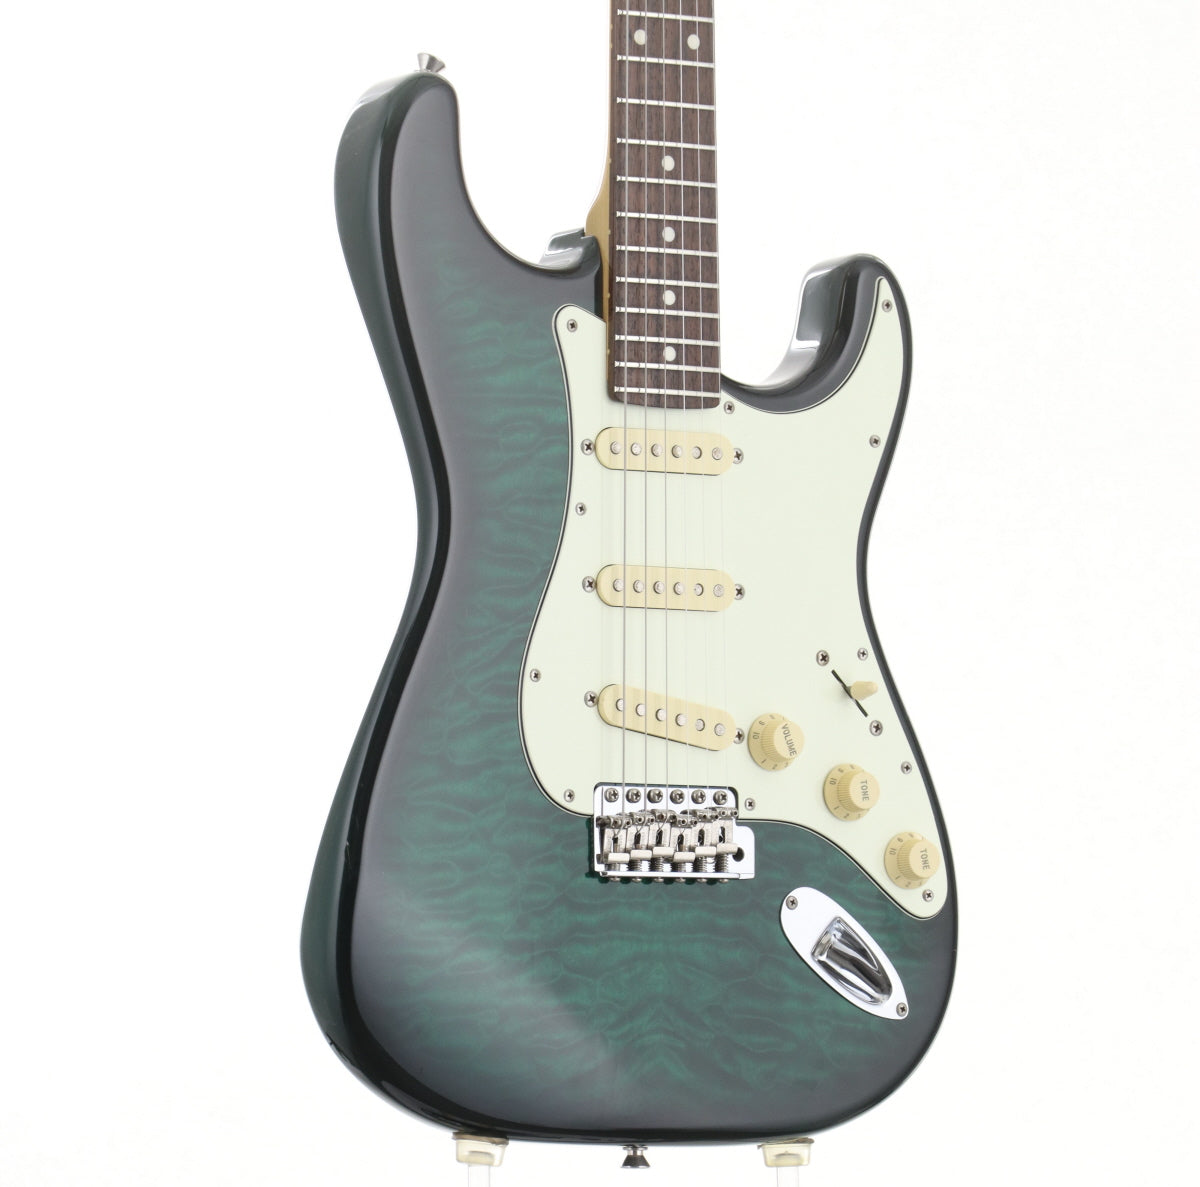 [SN JD13002997] USED FENDER / ST62/QT TRG Trans Green [Made in Japan][3.58kg / 2013] Fender Stratocaster [08]